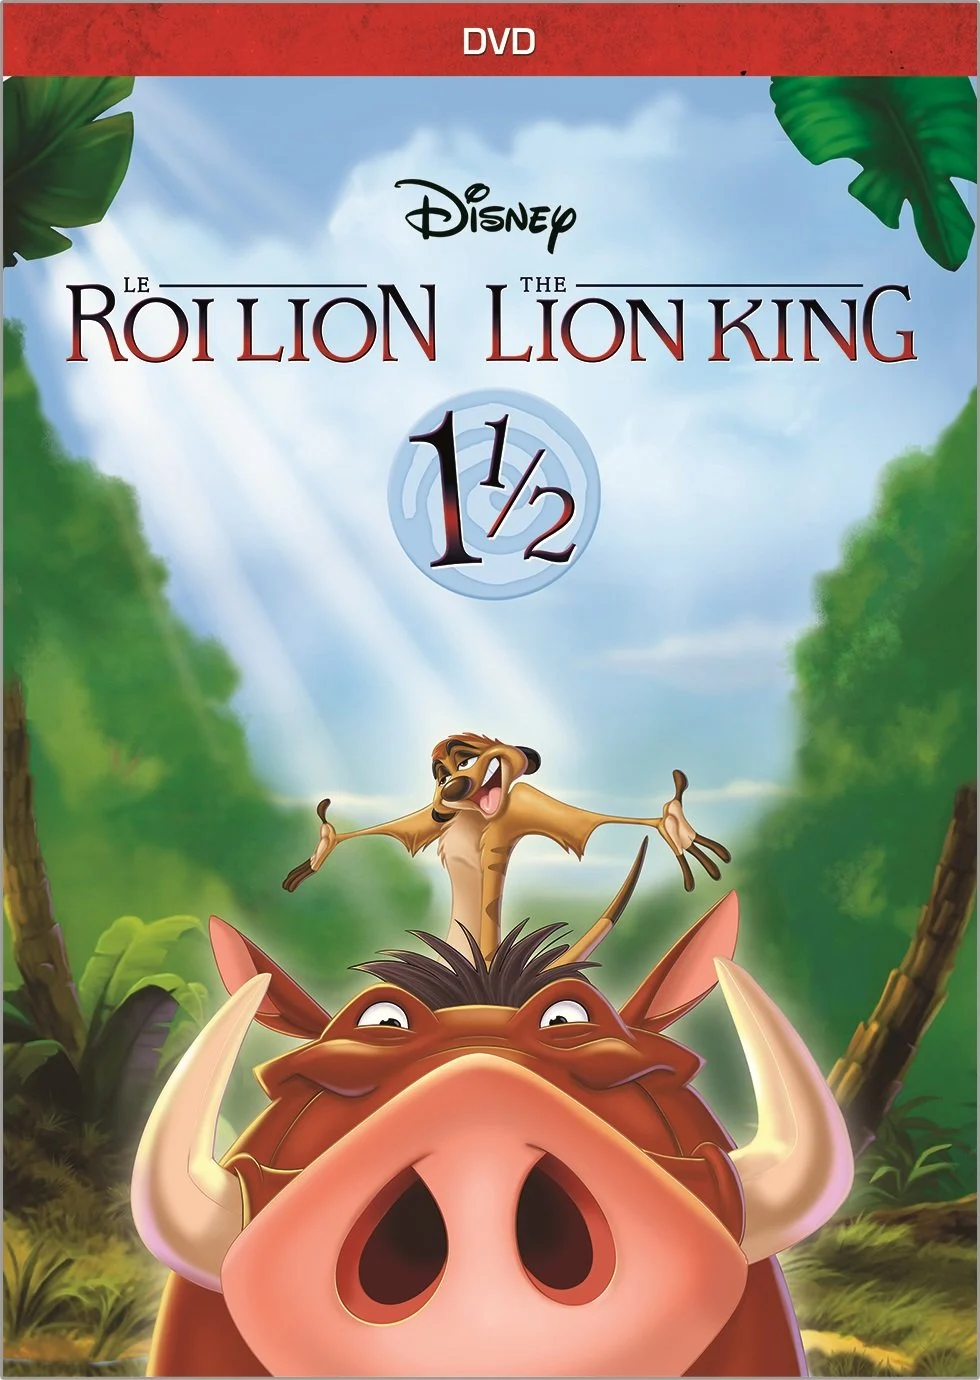 Lion King 1 1/2 (DVD) Bilingual on MovieShack